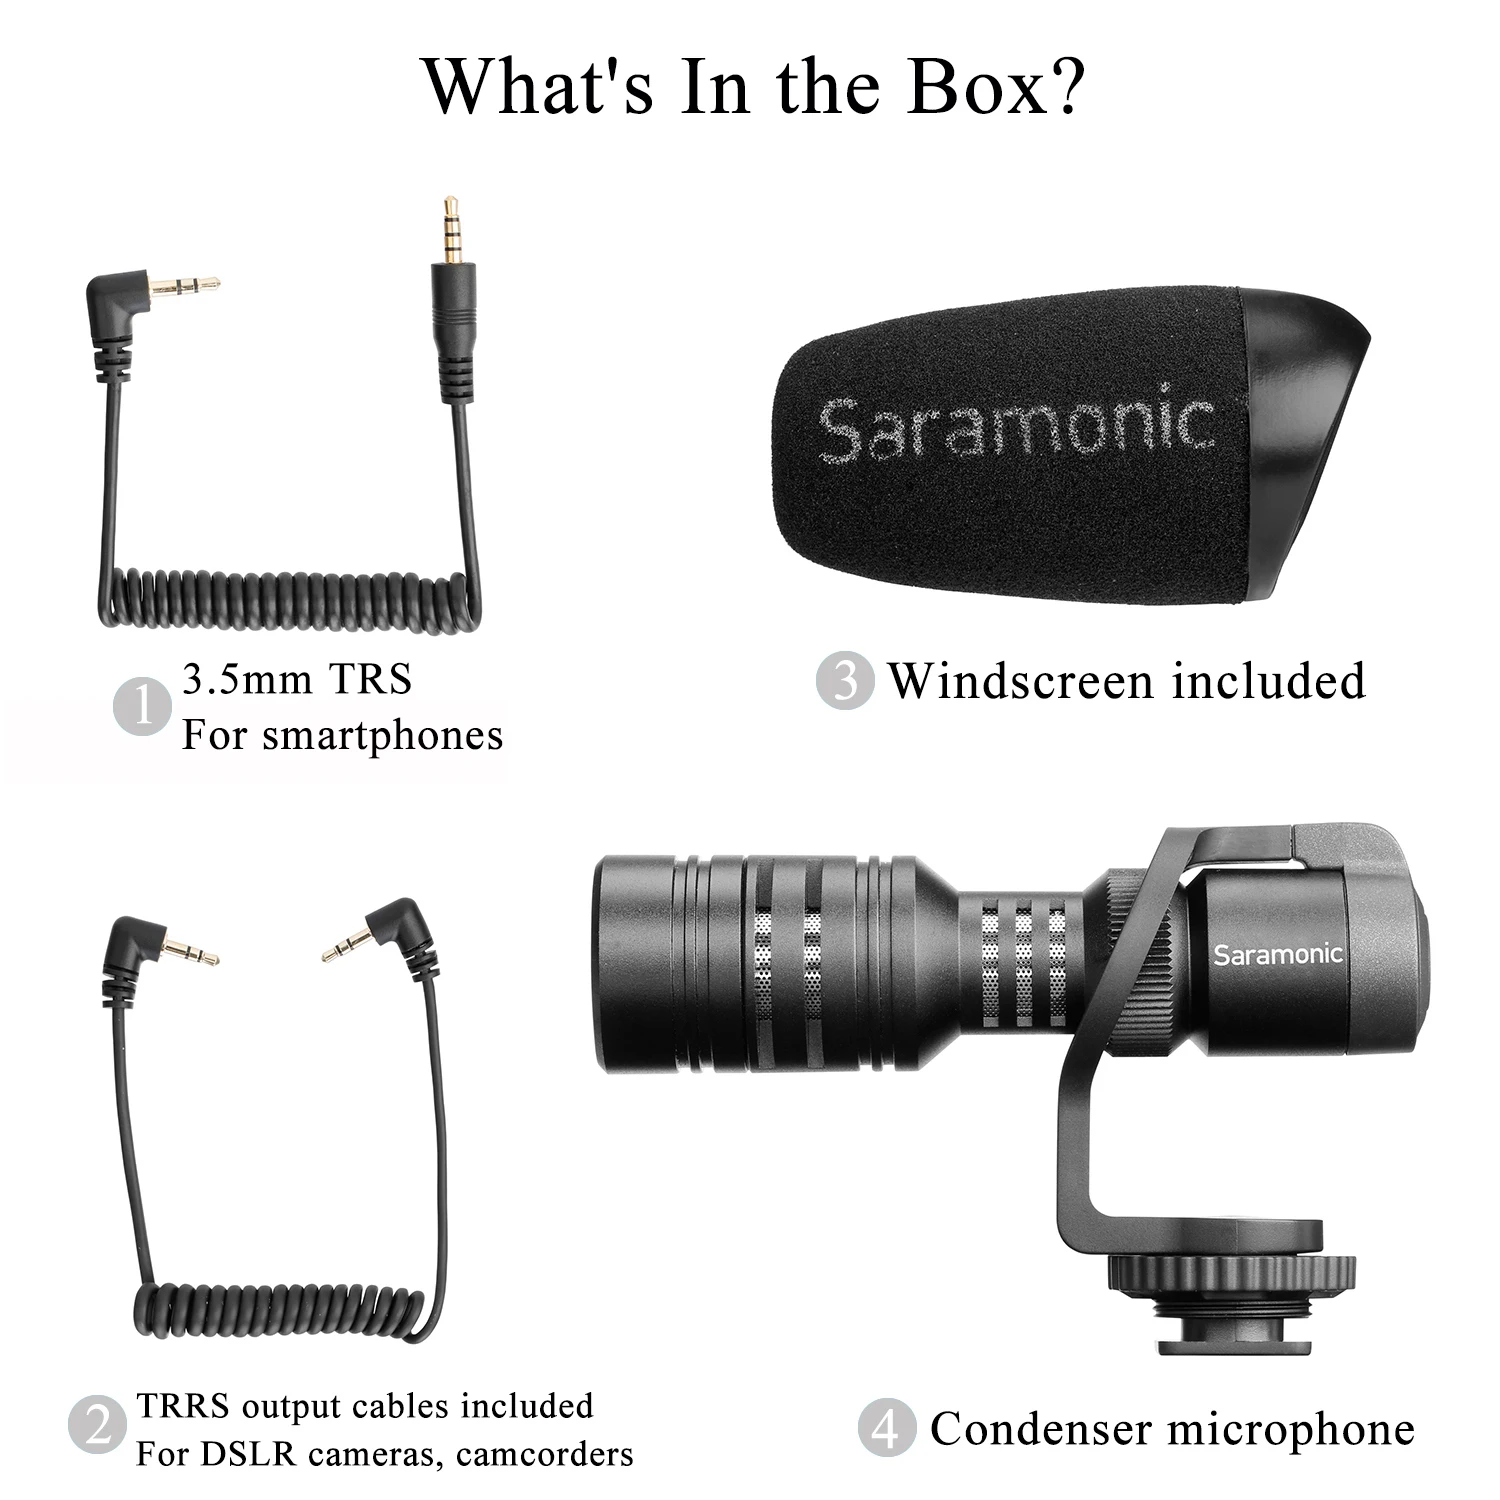 Saramonic Vmic Mini Professional Shotgun Condenser Microphone for Camera Smartphone with Shock Mount Vlogging Youtube Live enlarge